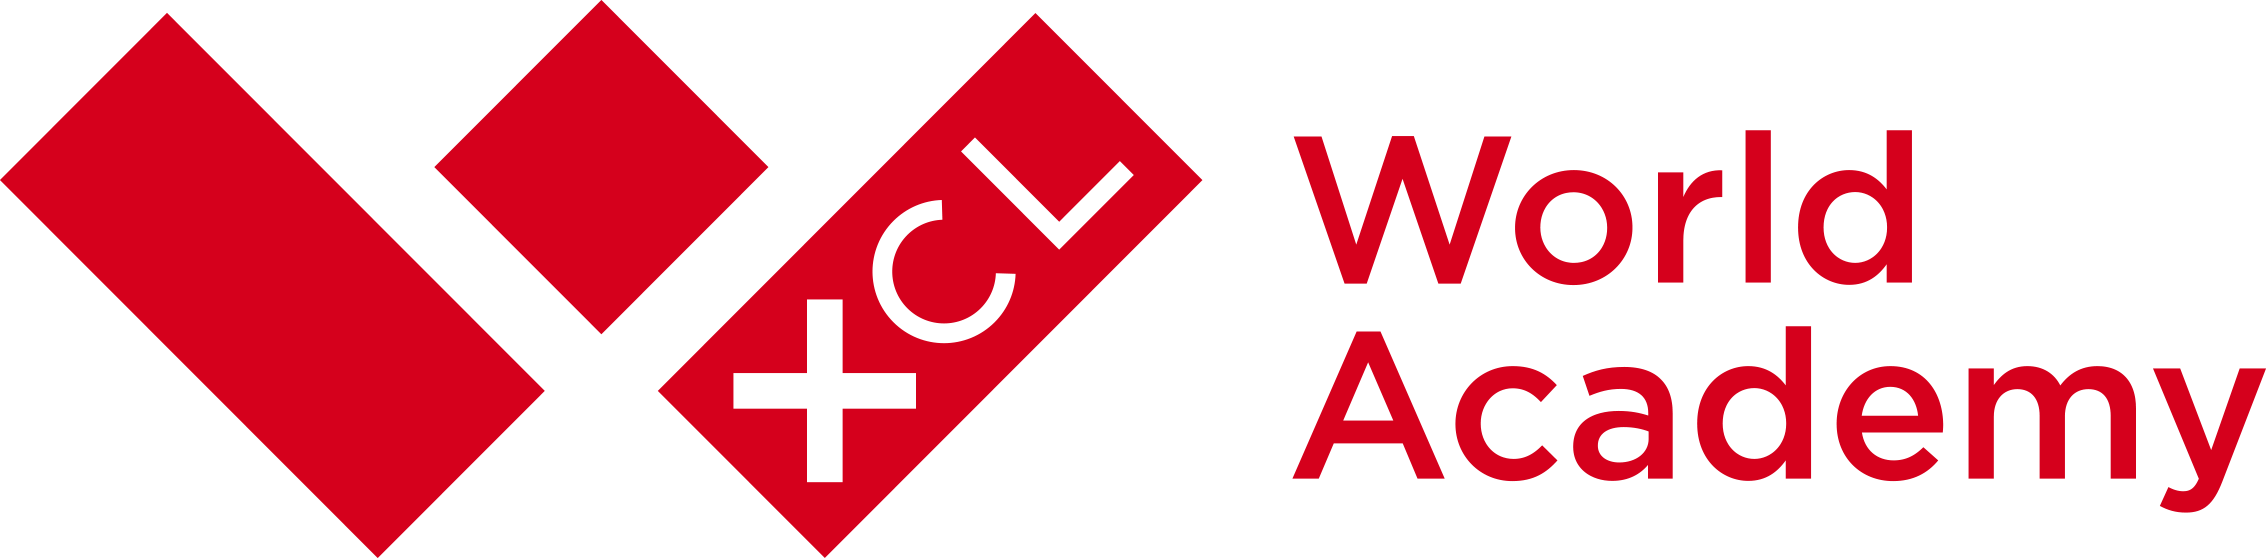 XCL WORLD ACADEMY PTE. LTD. logo